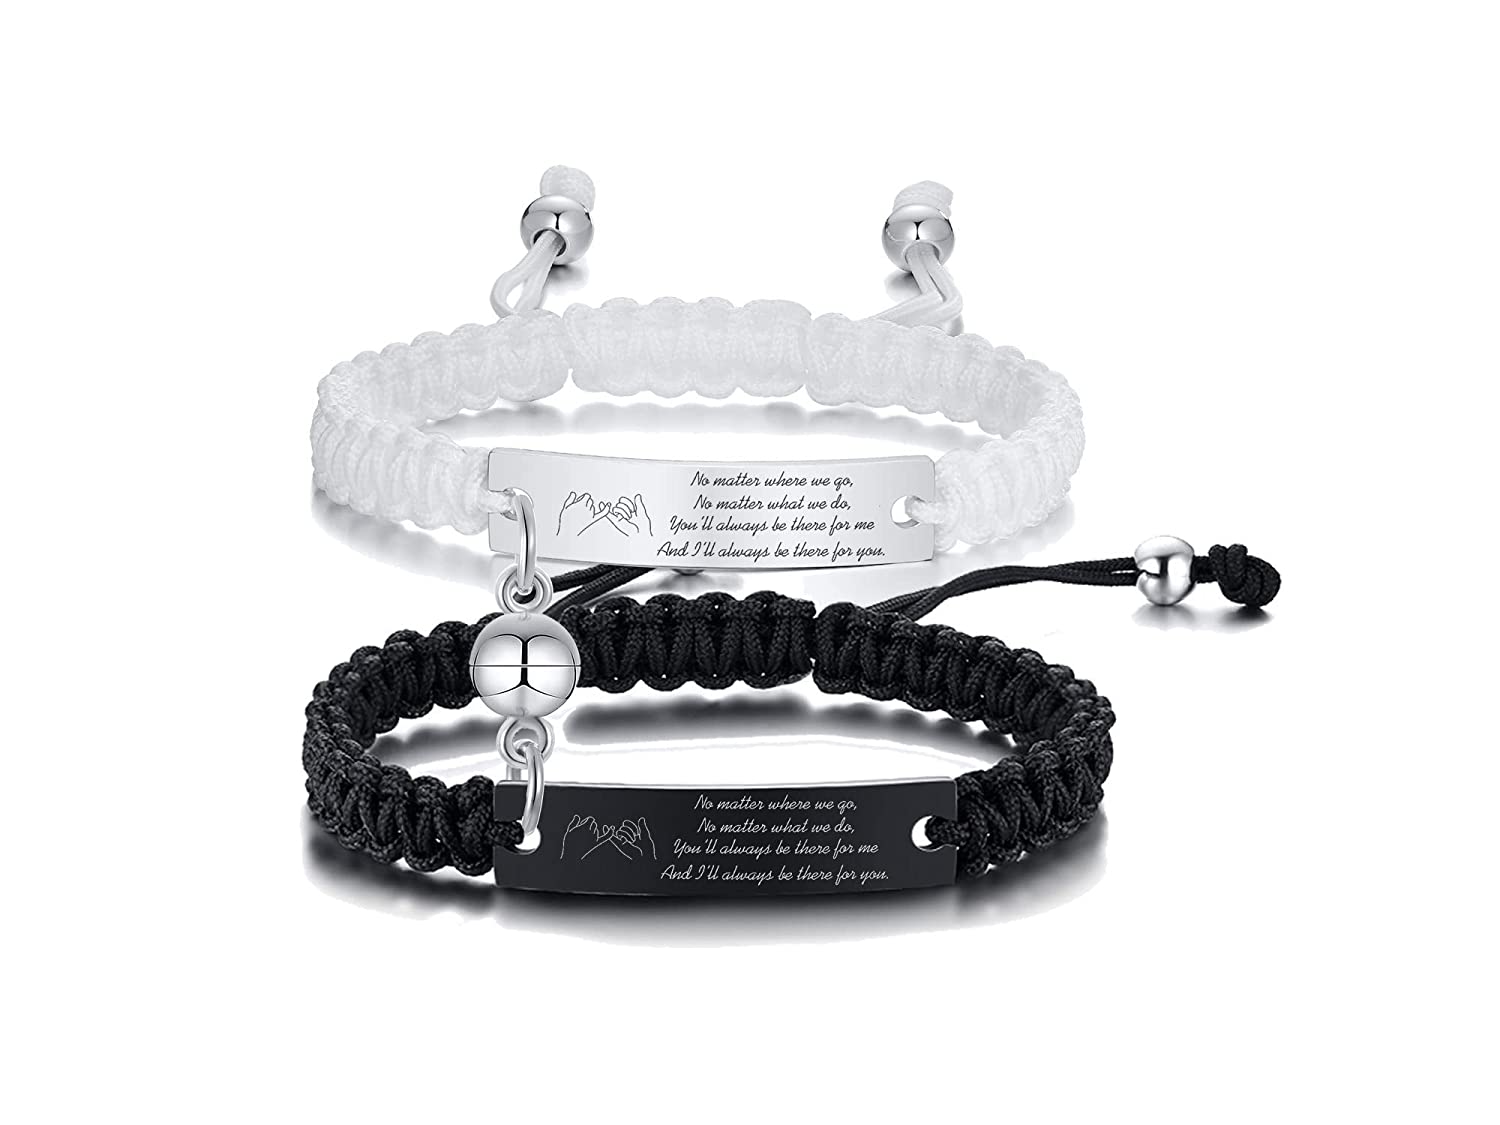 MEALGUET Personalized ID Couple Bracelets Custom Engraving Handmade Braided Rope Wrist Bangle for Men Women Friendship, Adjustable,Customized